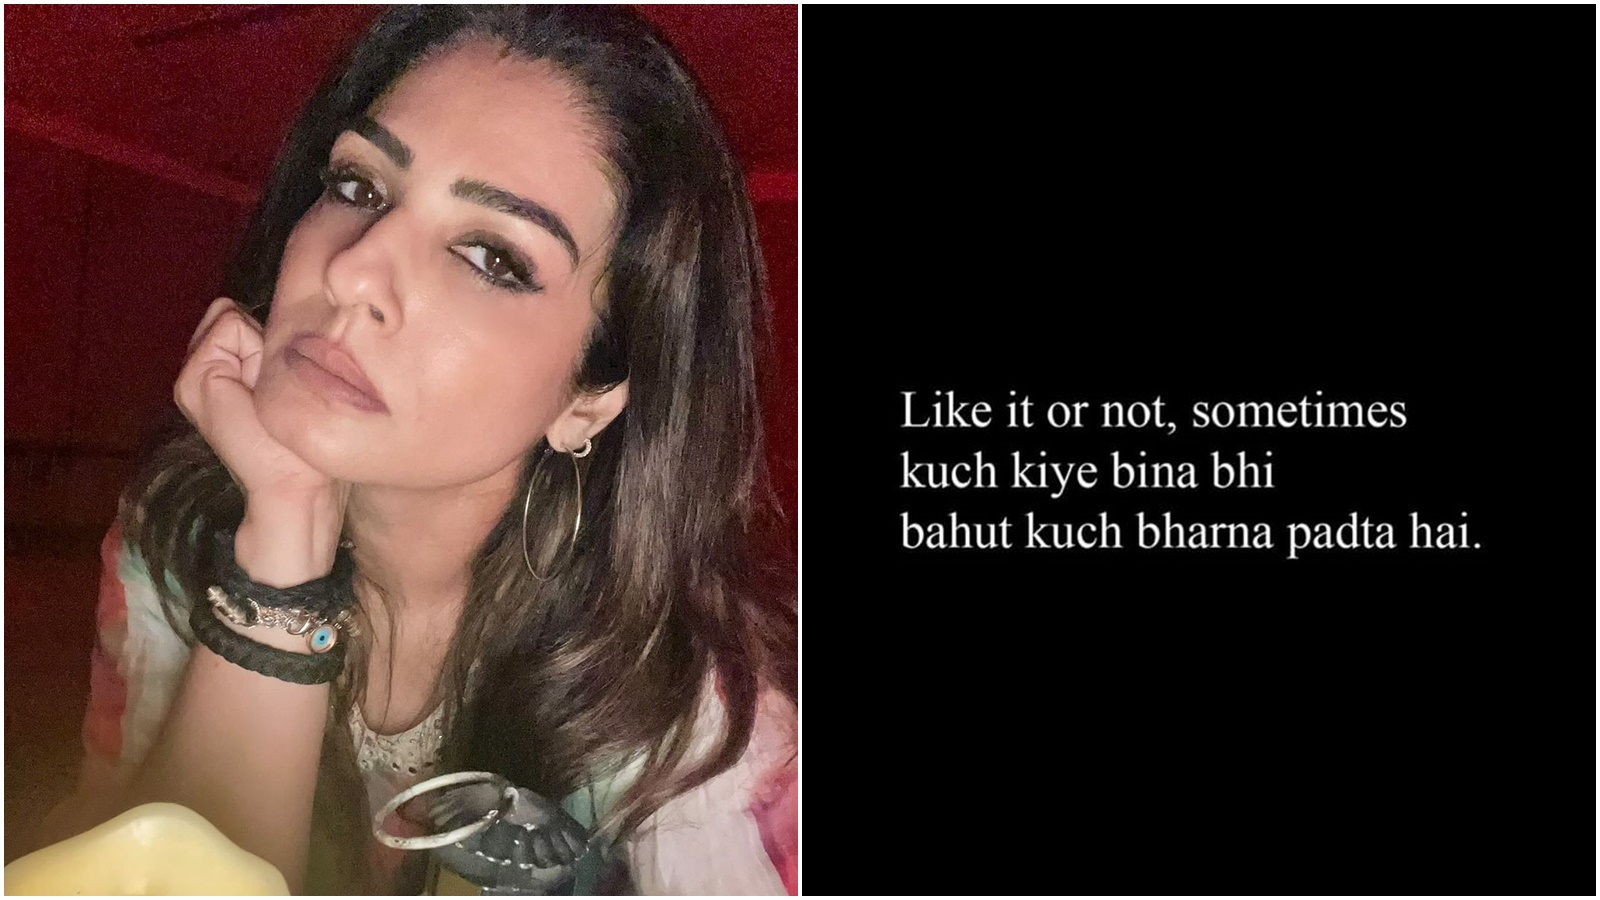 Binarai Xxx - Days after Archies backlash, Raveena Tandon writes, 'sometimes kuch kiye  bina bhiâ€¦' | Bollywood News - The Indian Express